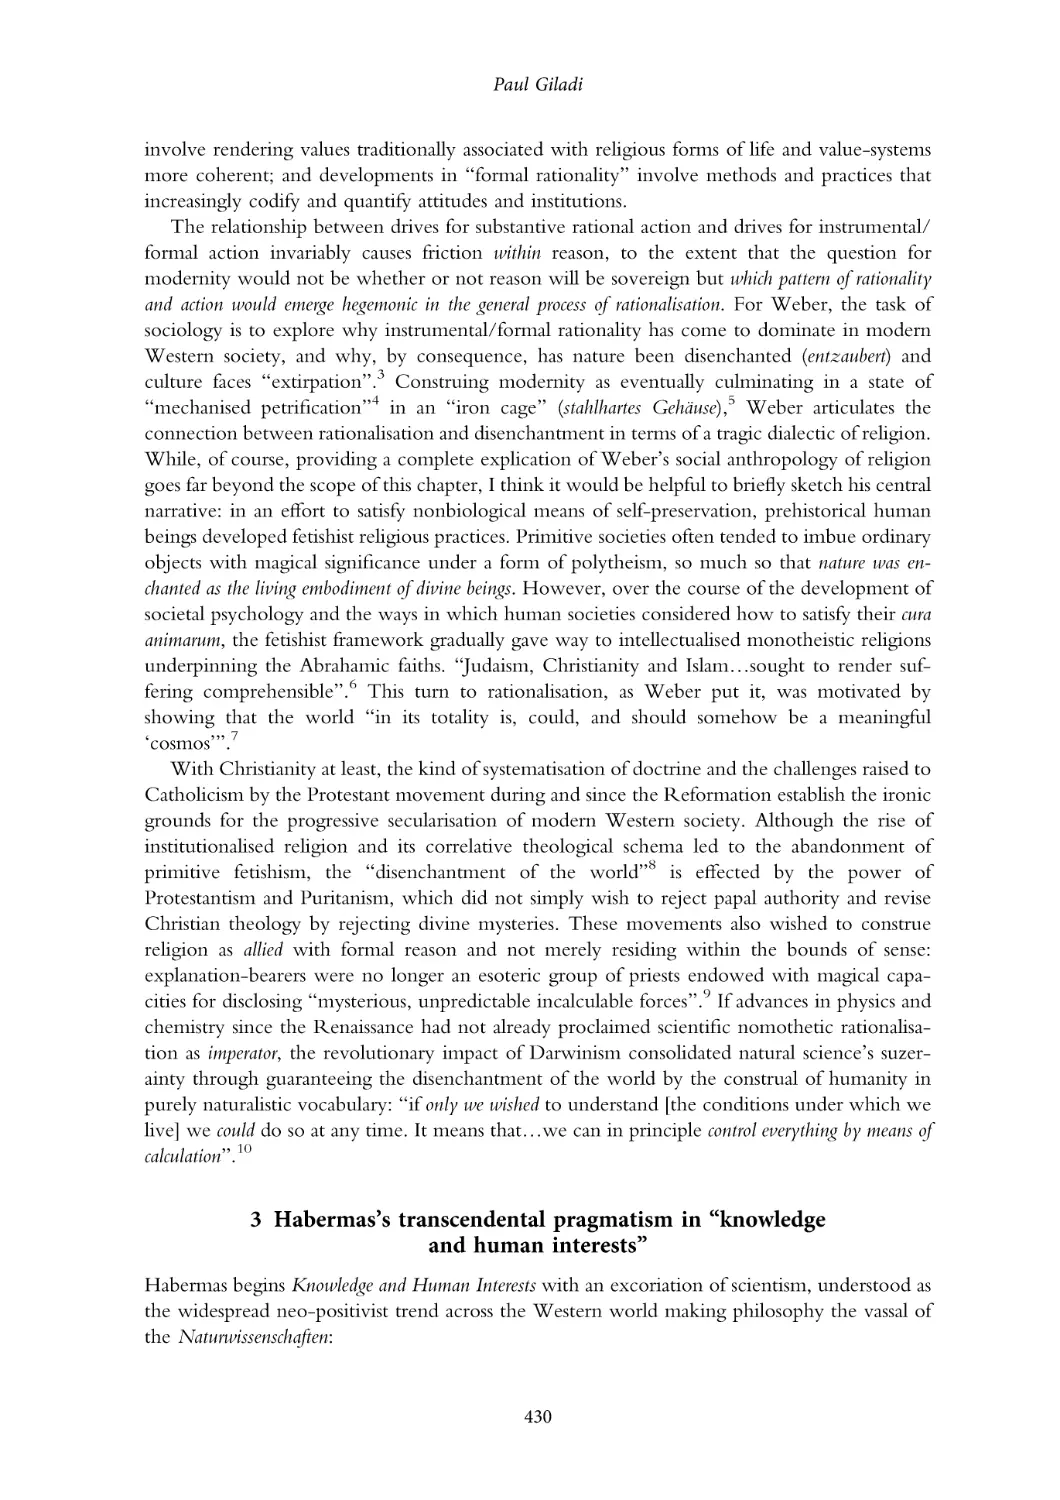 3. Habermas's transcendental pragmatism in "knowledge and human interests"